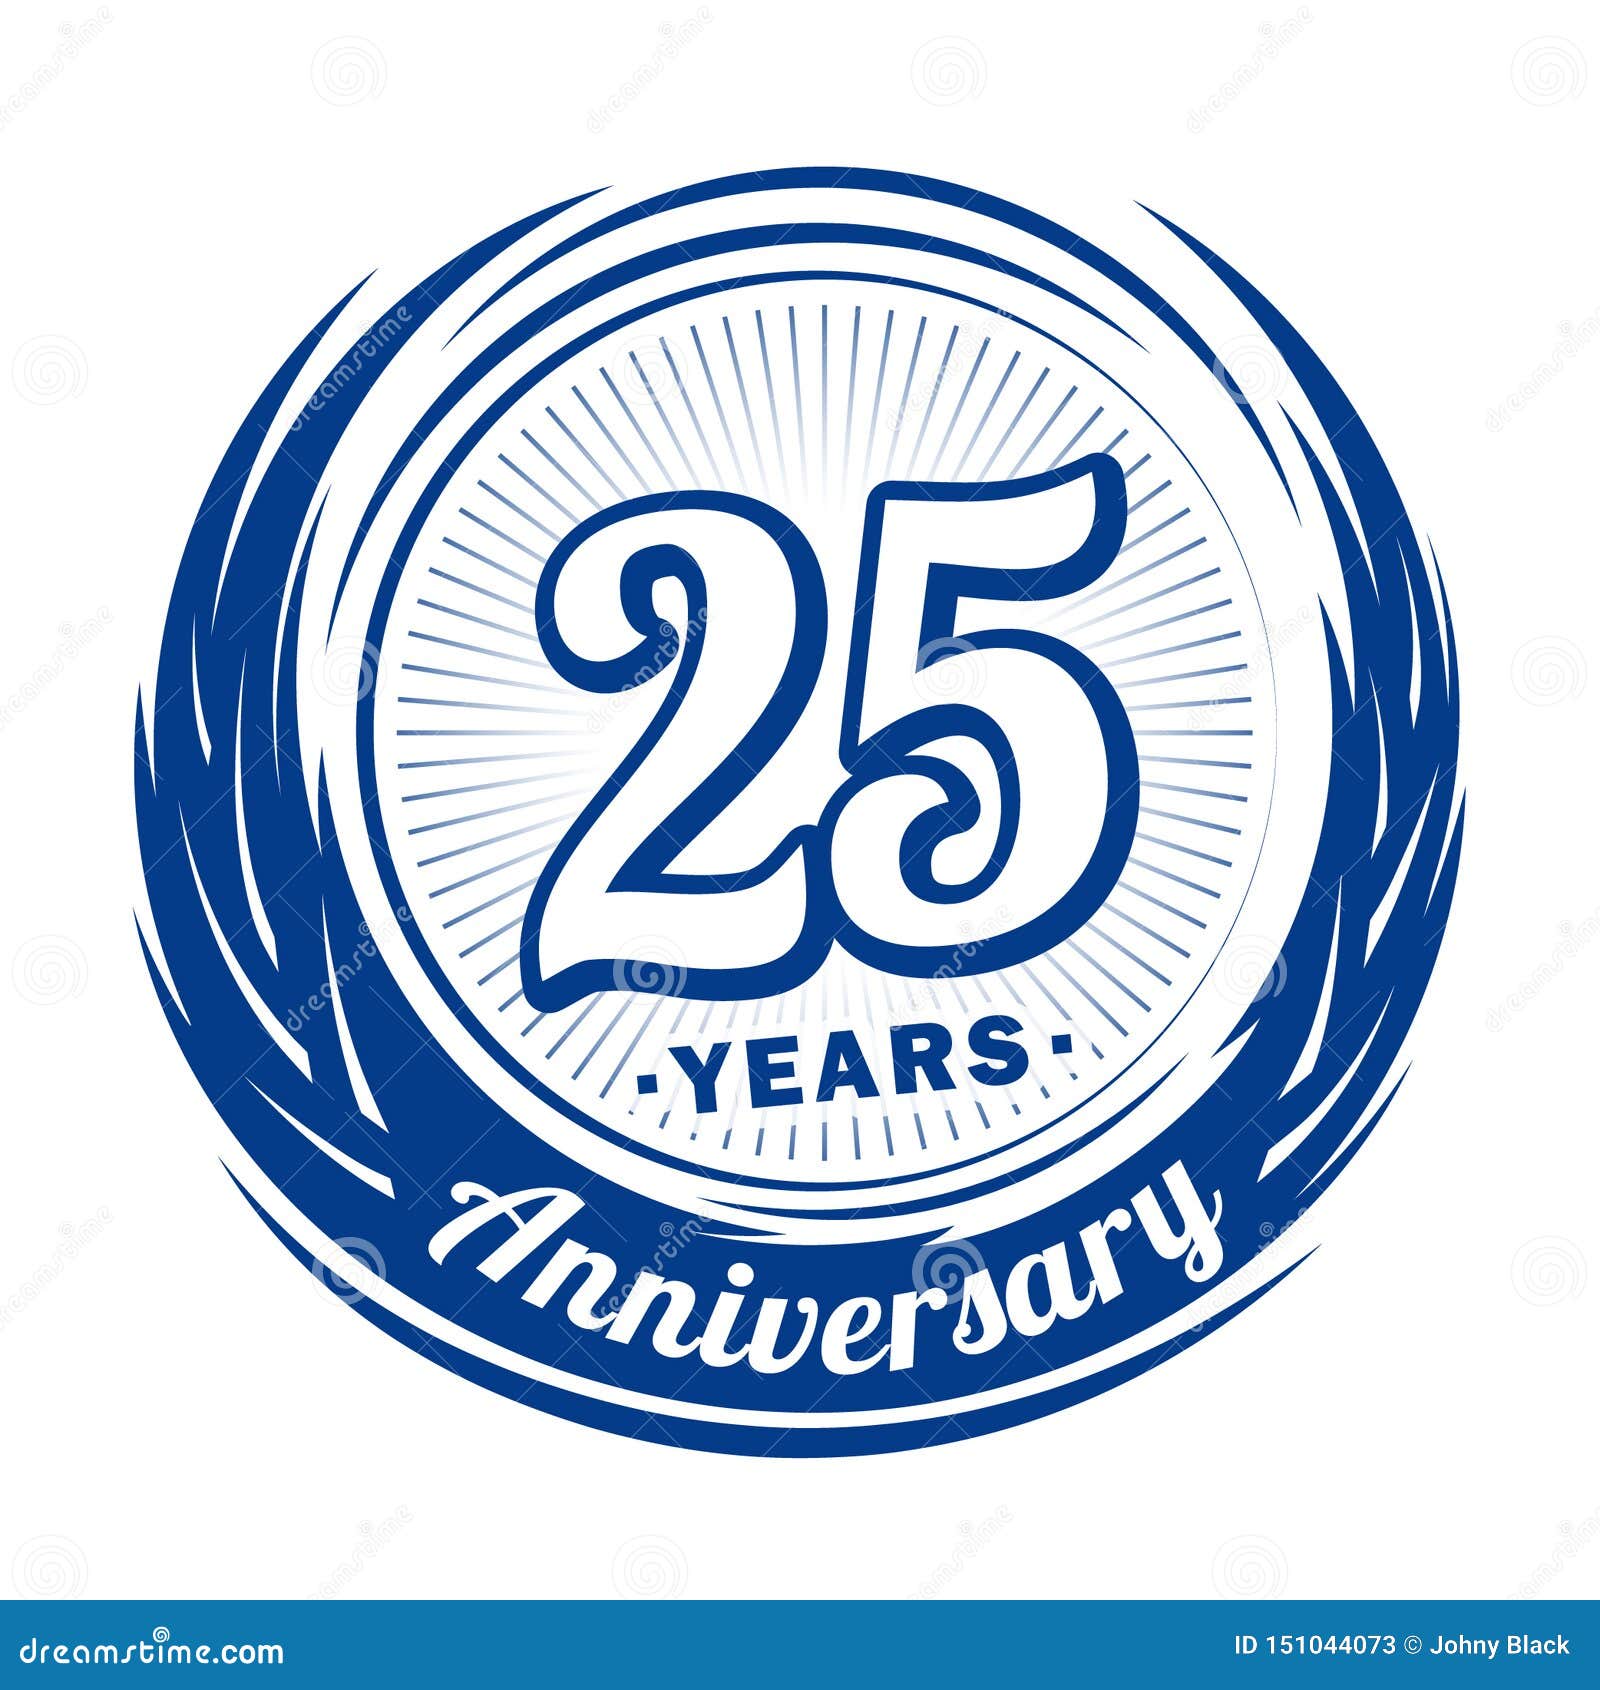 Design do ícone do logotipo número 25, número do logotipo do 25º aniversário,  aniversário 25